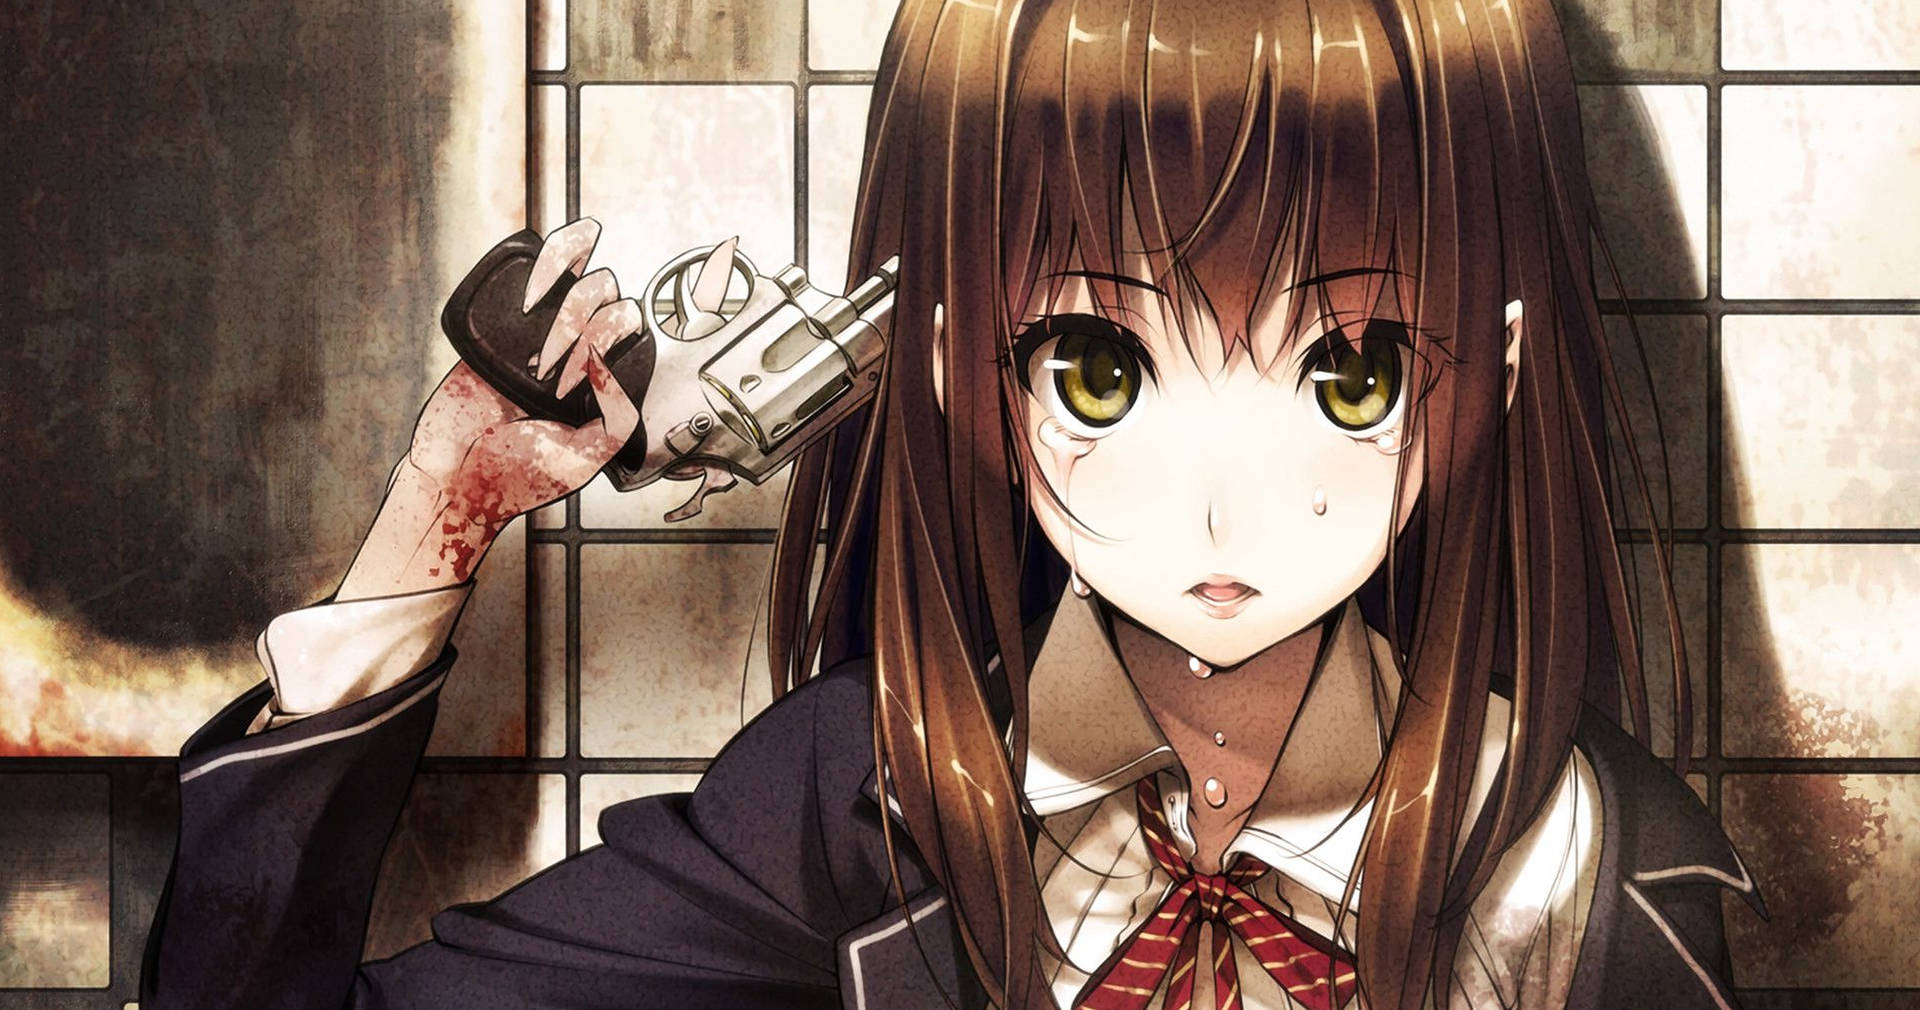 Download Depressed Anime Girl With Gun Wallpaper 